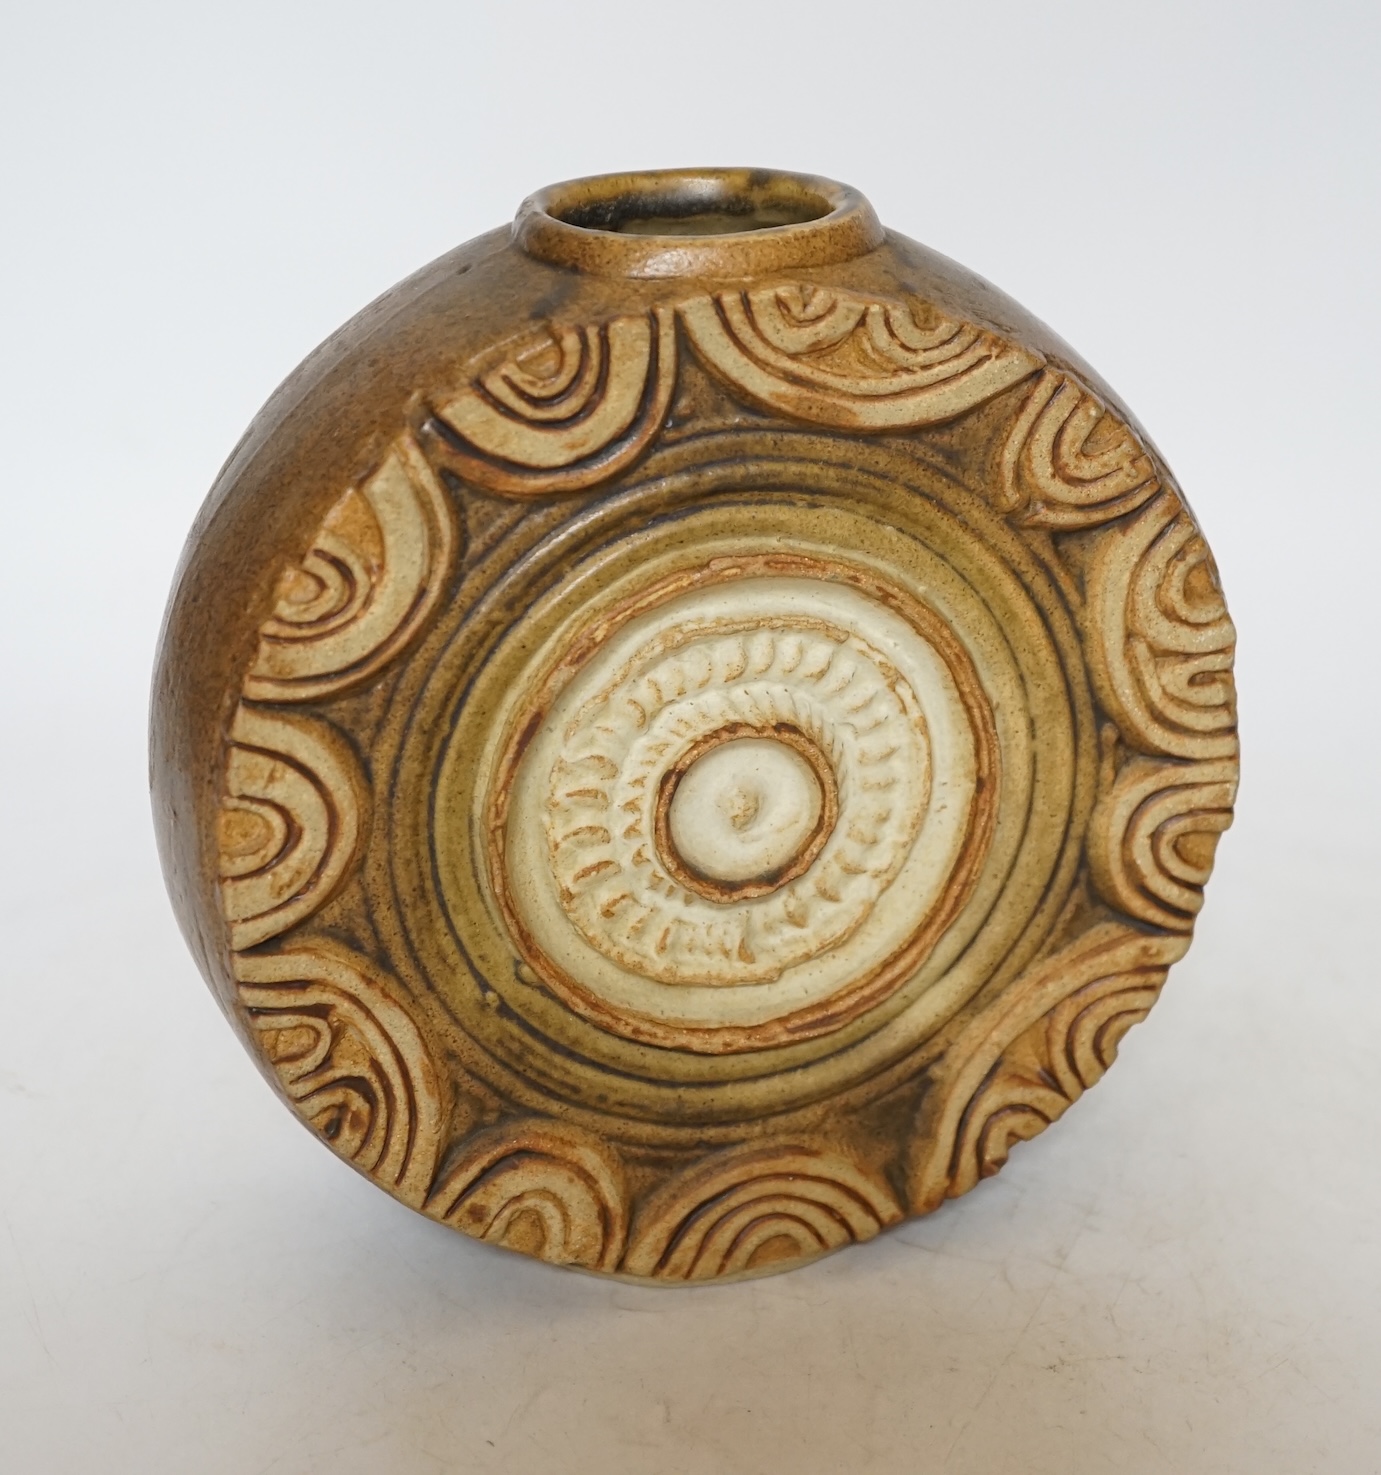 A Bernard Rooke circular pottery vase, signed BR on base, 18.5cm high